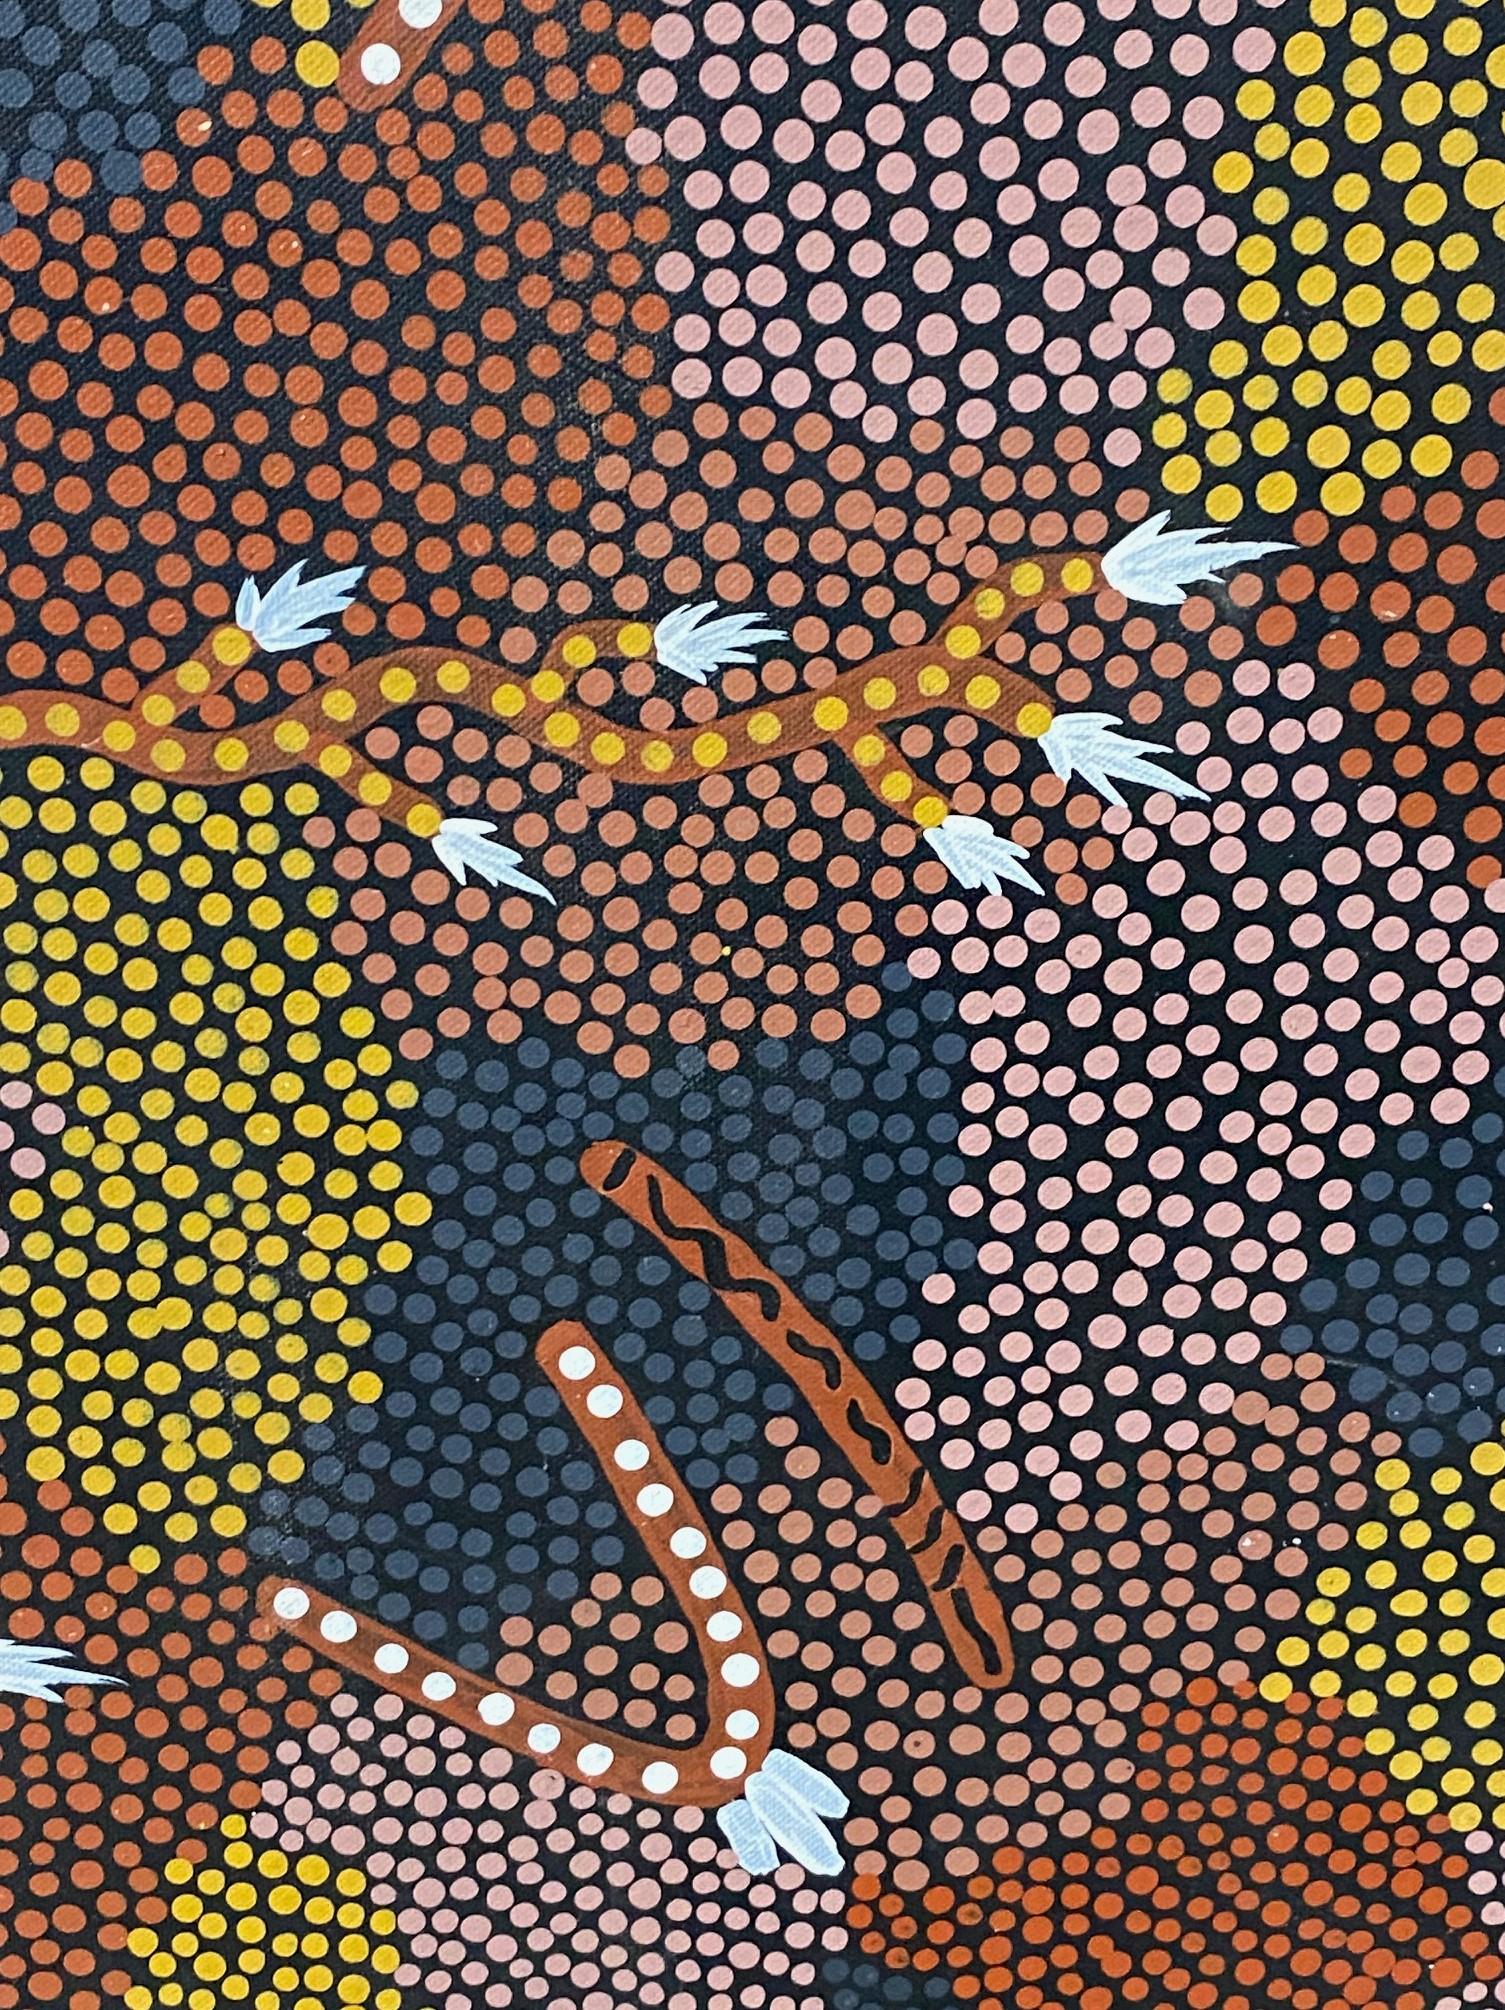 Hand-Painted Clifford Possum Tjapaltjarri Indigenous Aboriginal Art Large Original Painting For Sale